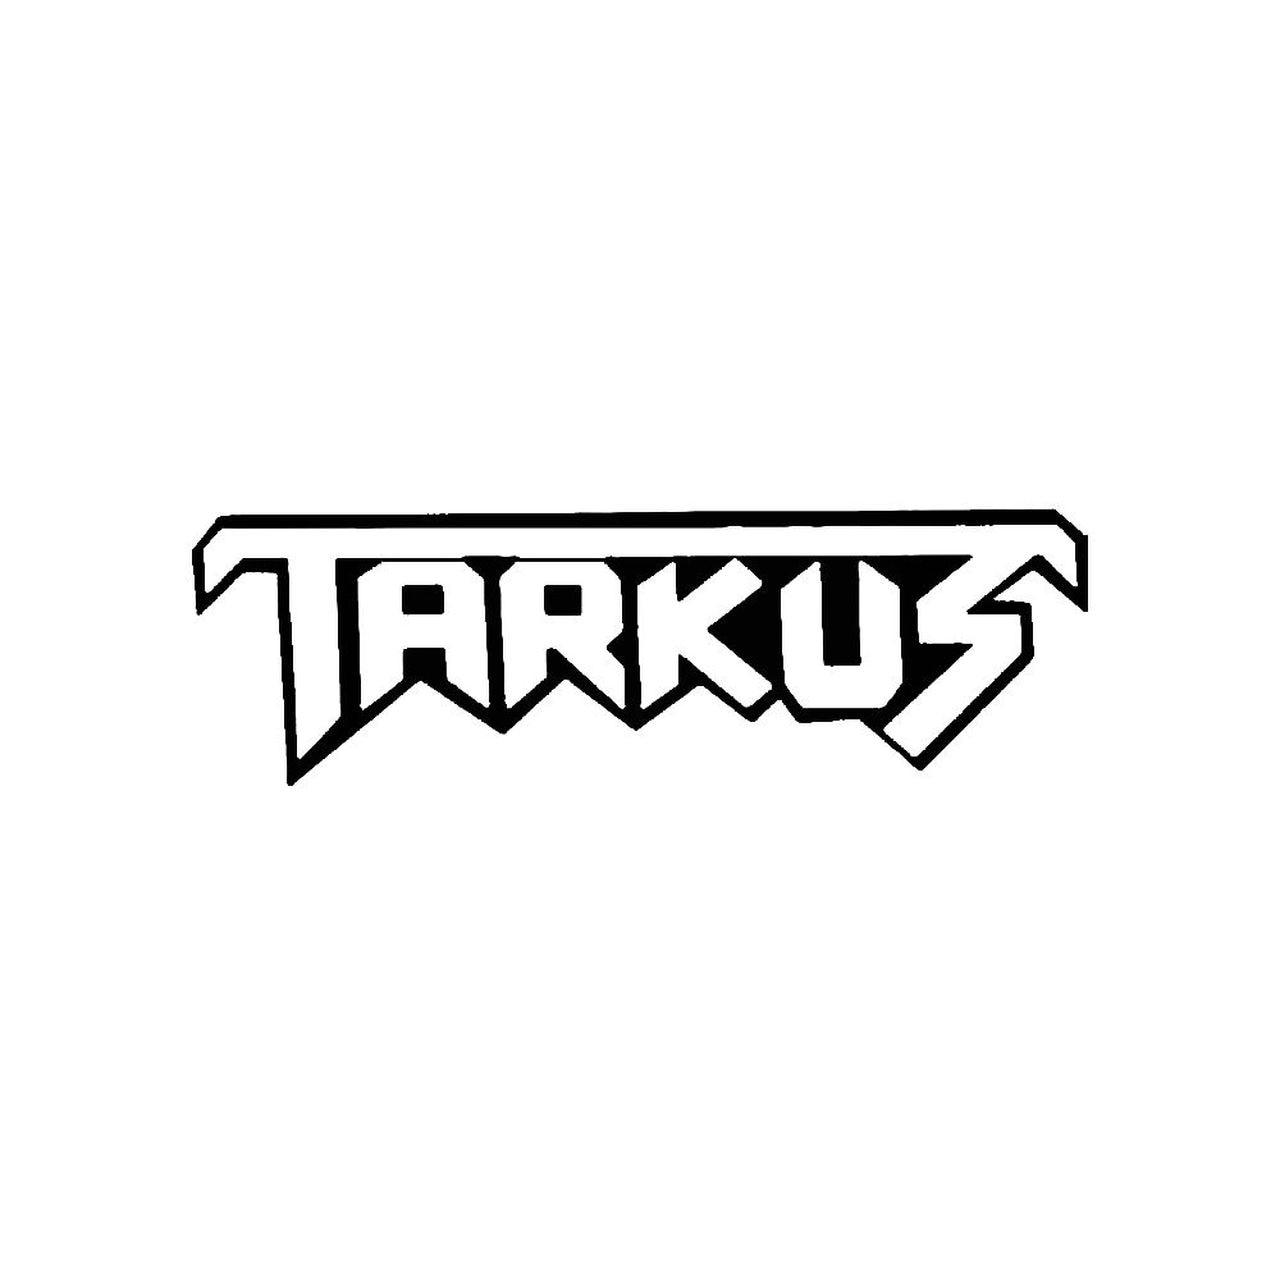 Tarkus Logo - Tarkus Band Logo Vinyl Decal